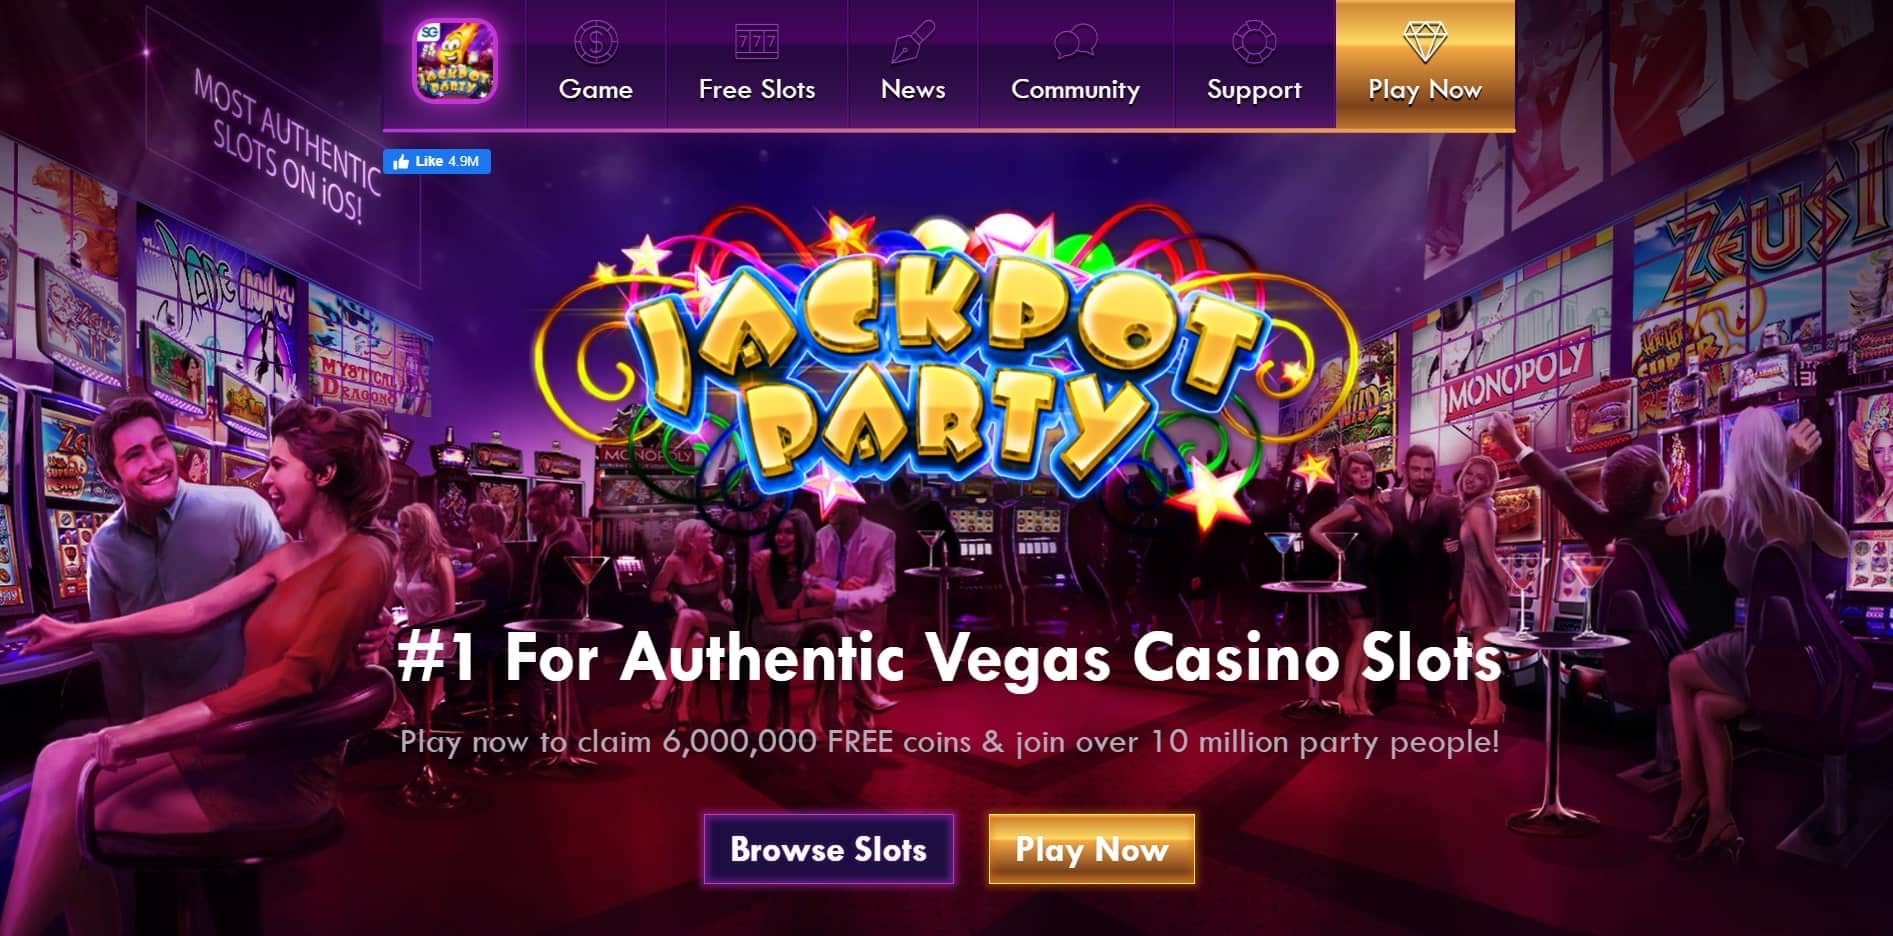 jackpot block party casino games free